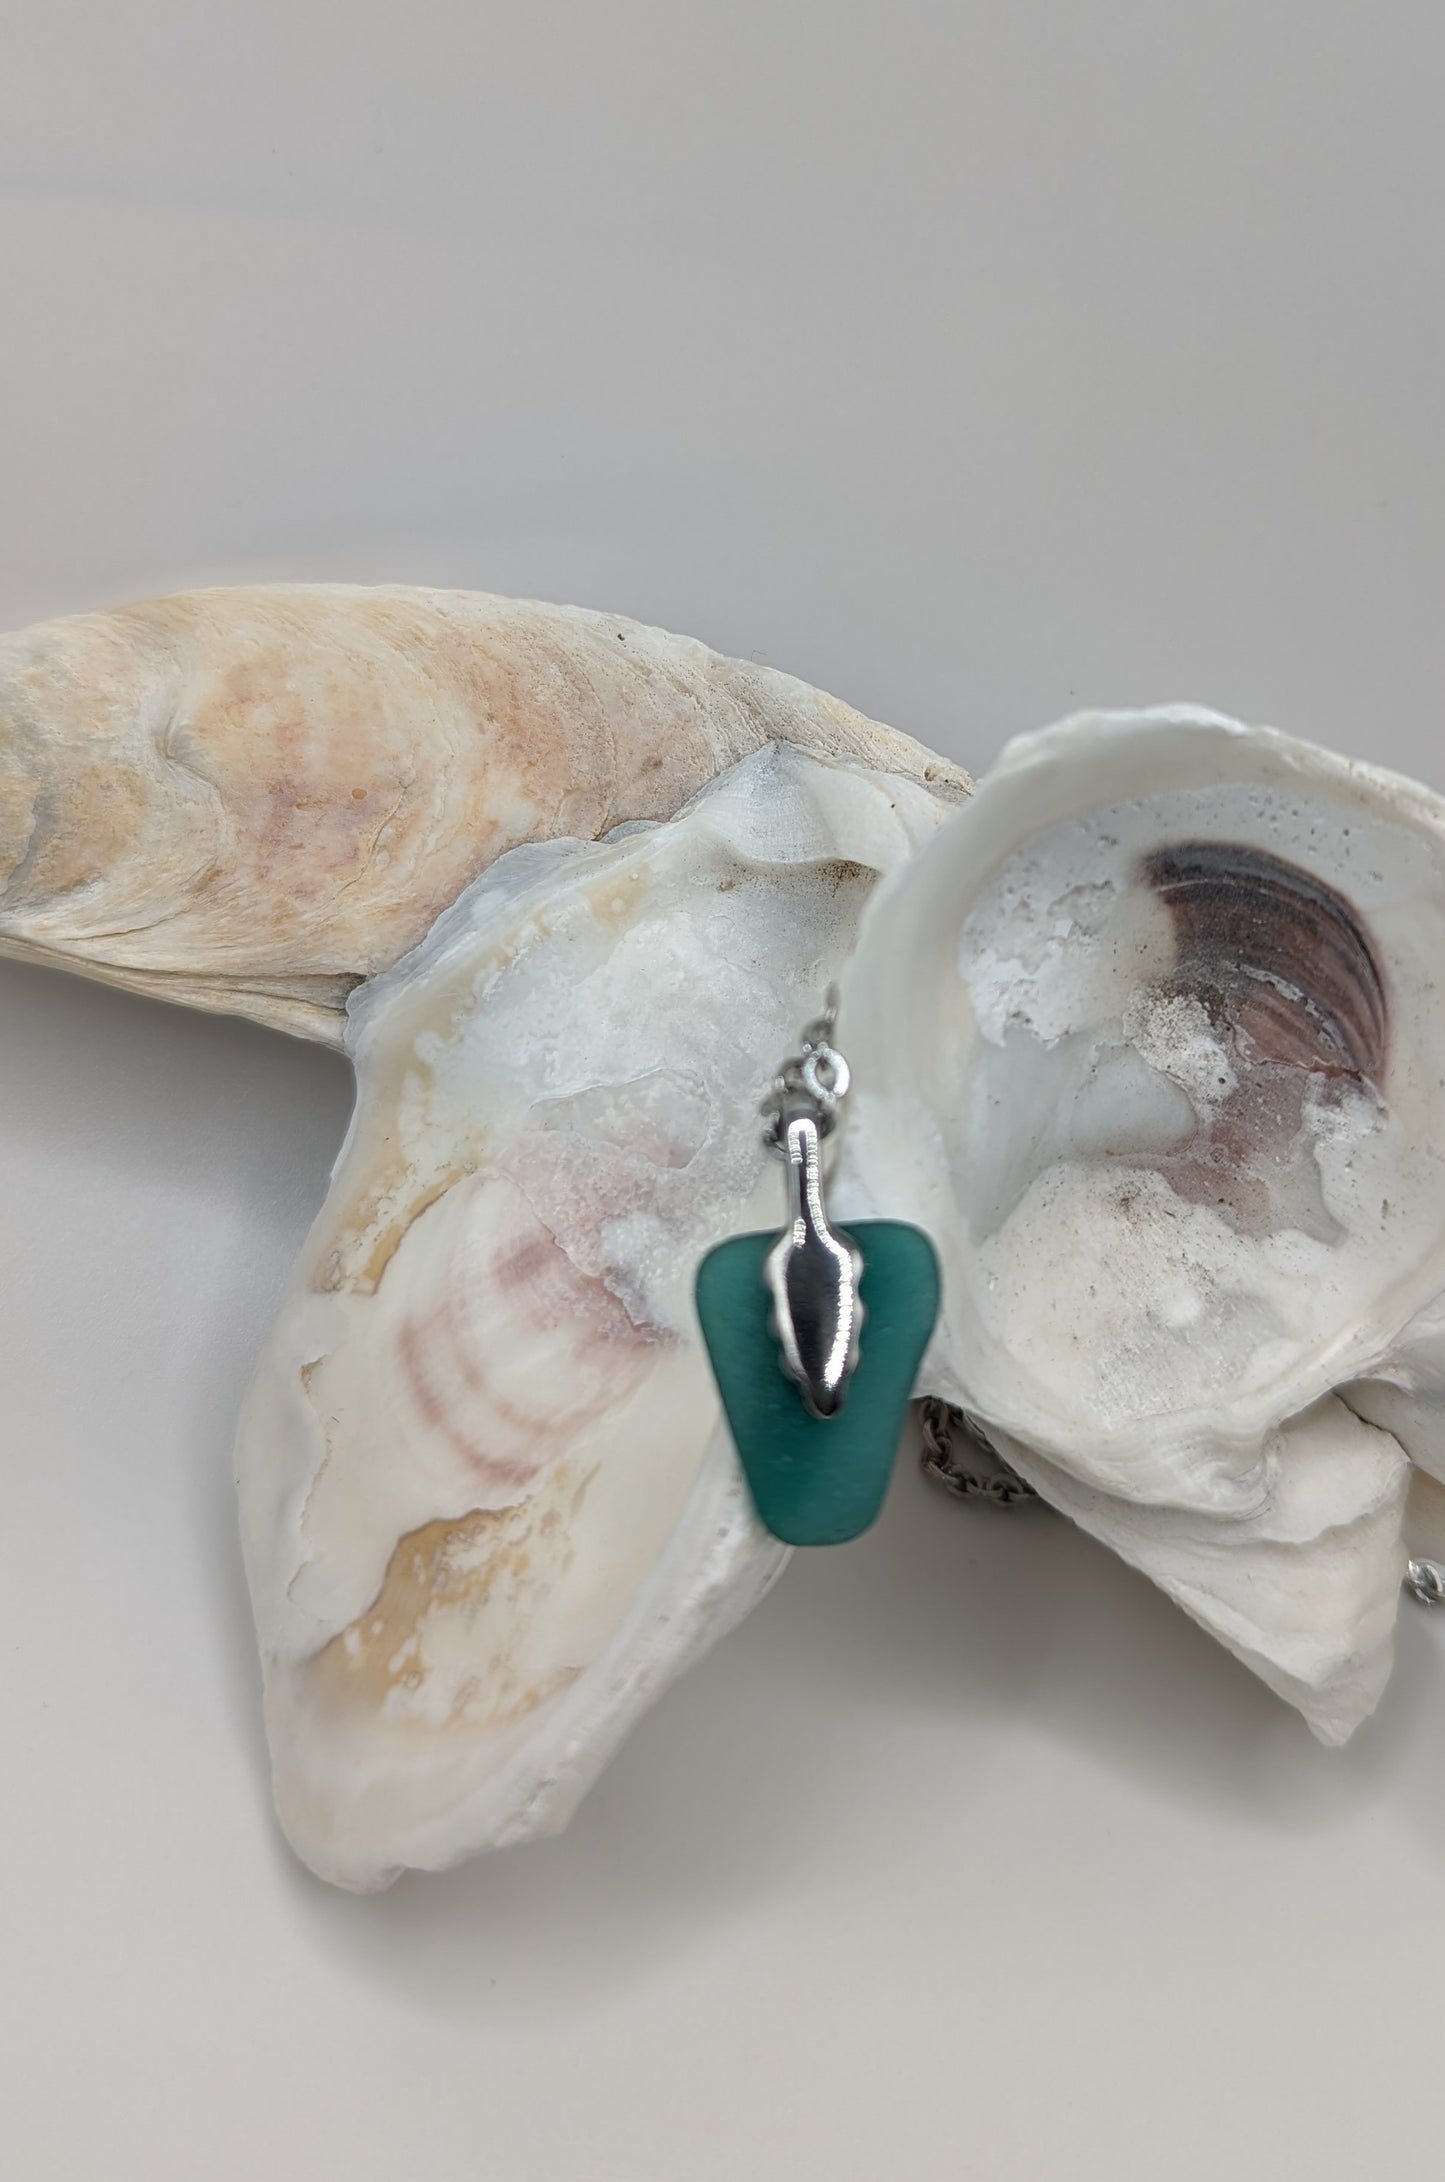 Teal Seaglass pendant, genuine seaglass, seaglass jewelry